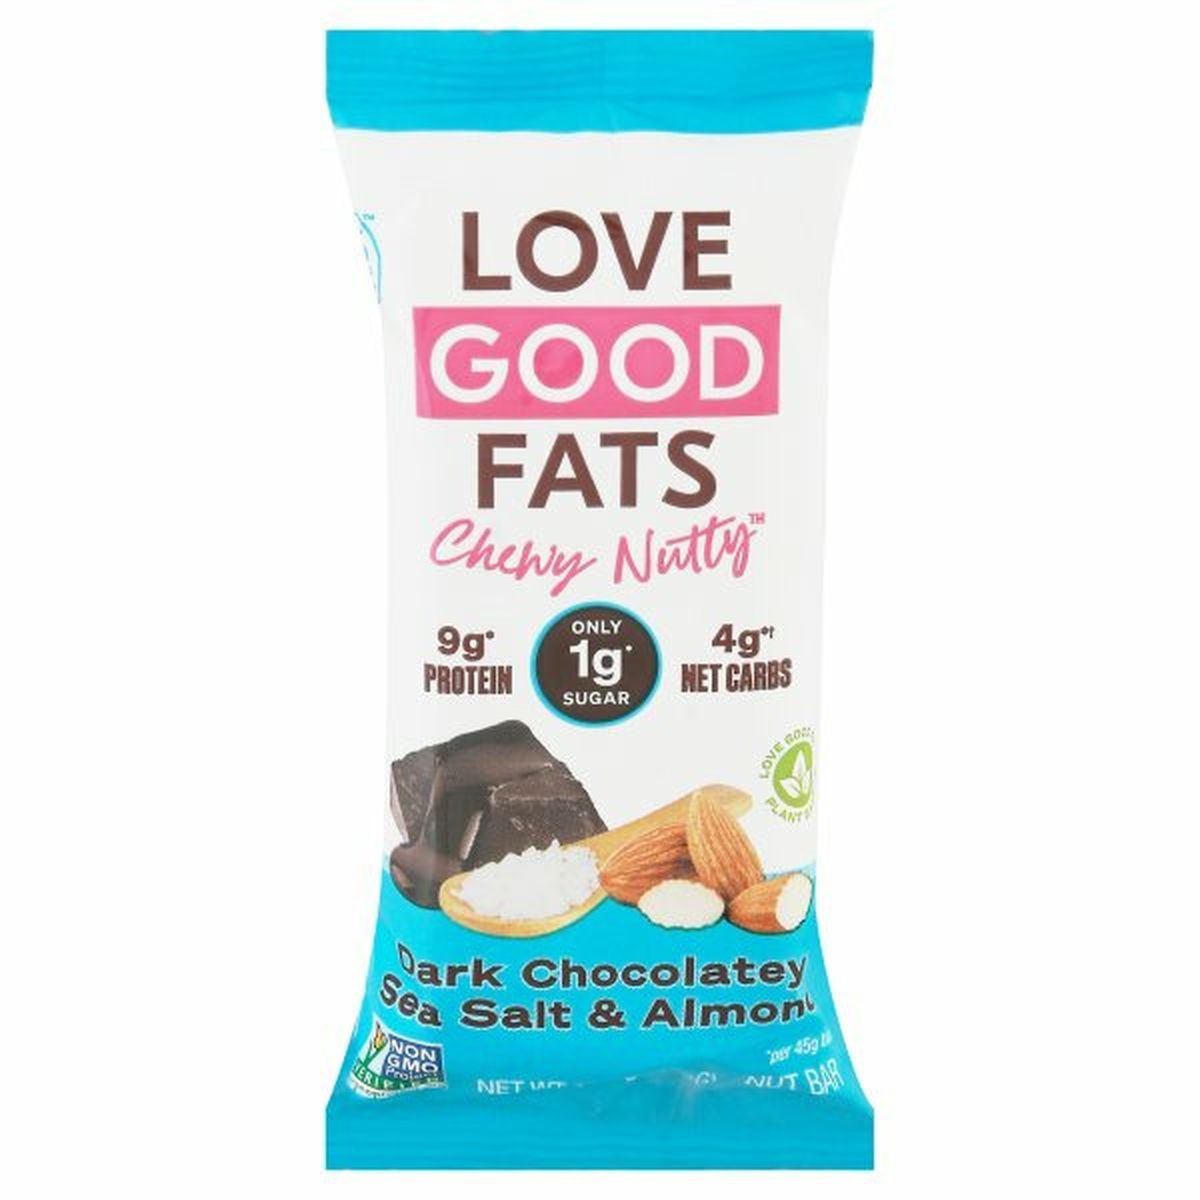 Calories in Love Good Fats Chewy Nutty Nut Bar, Dark Chocolatey Sea Salt & Almond